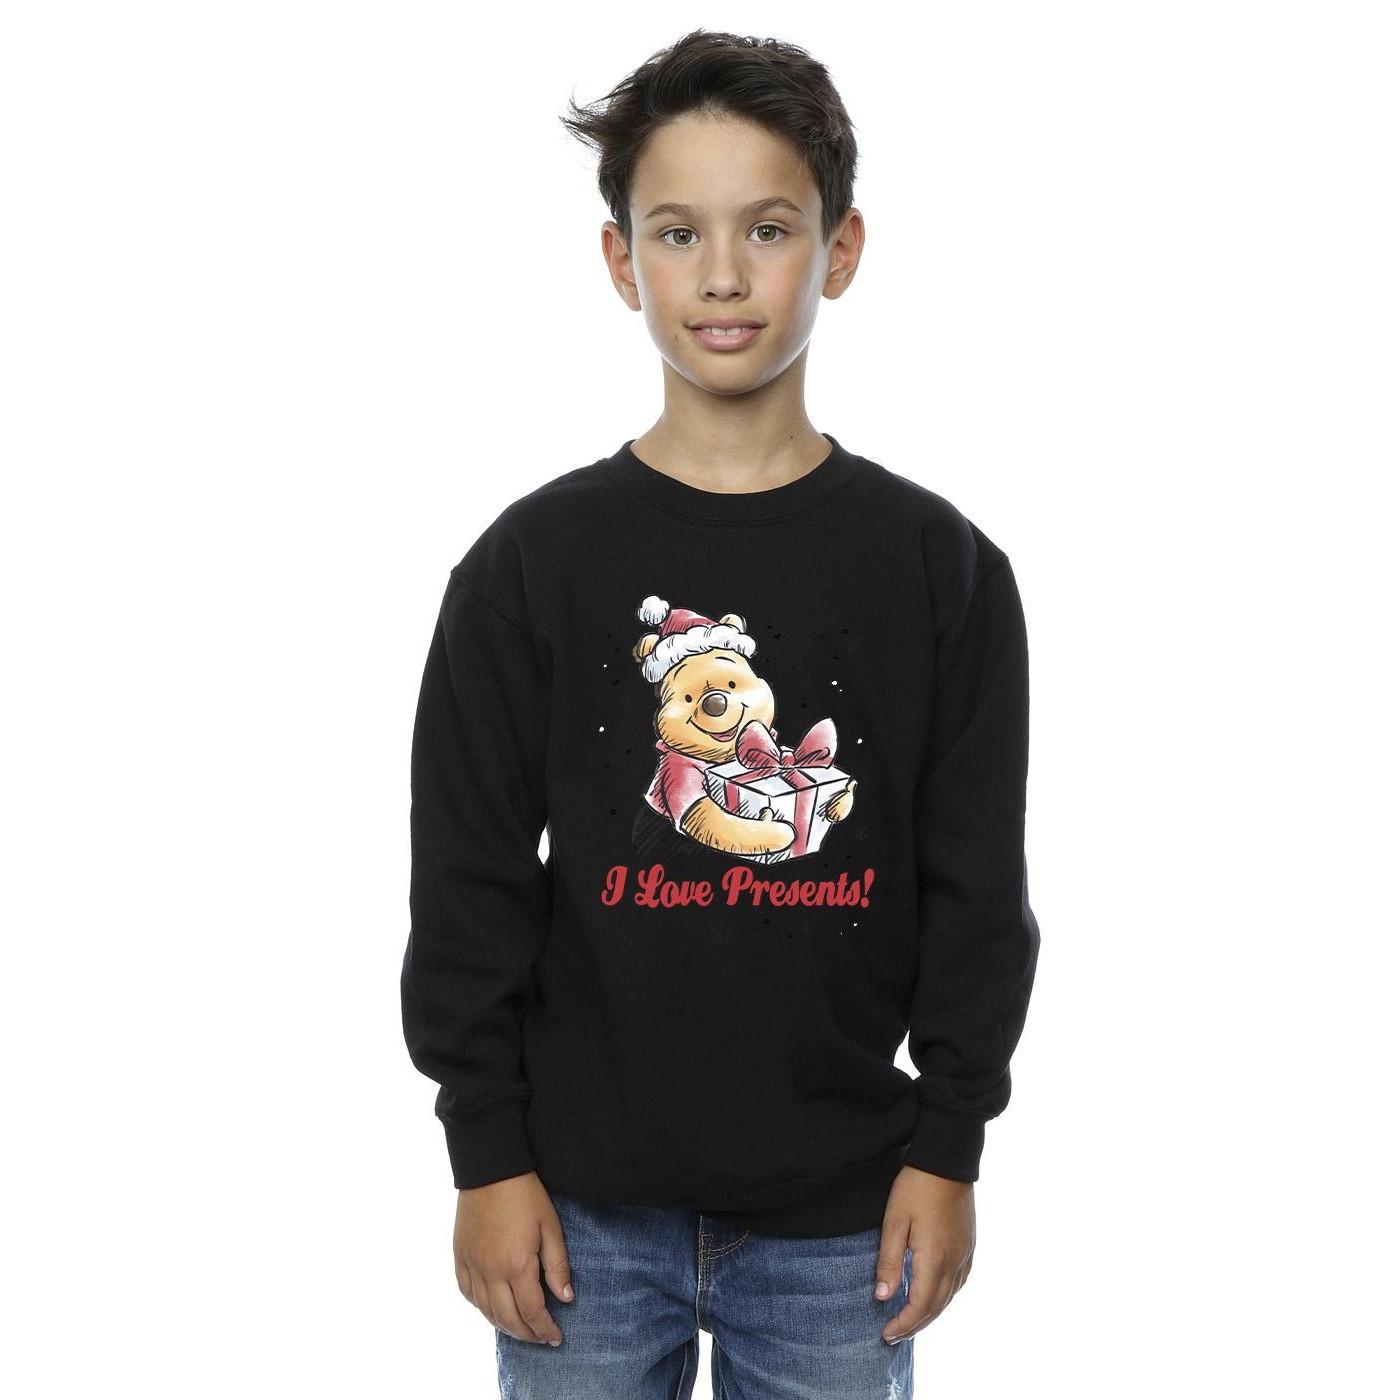 Disney  Winnie The Pooh Love Presents Sweatshirt 